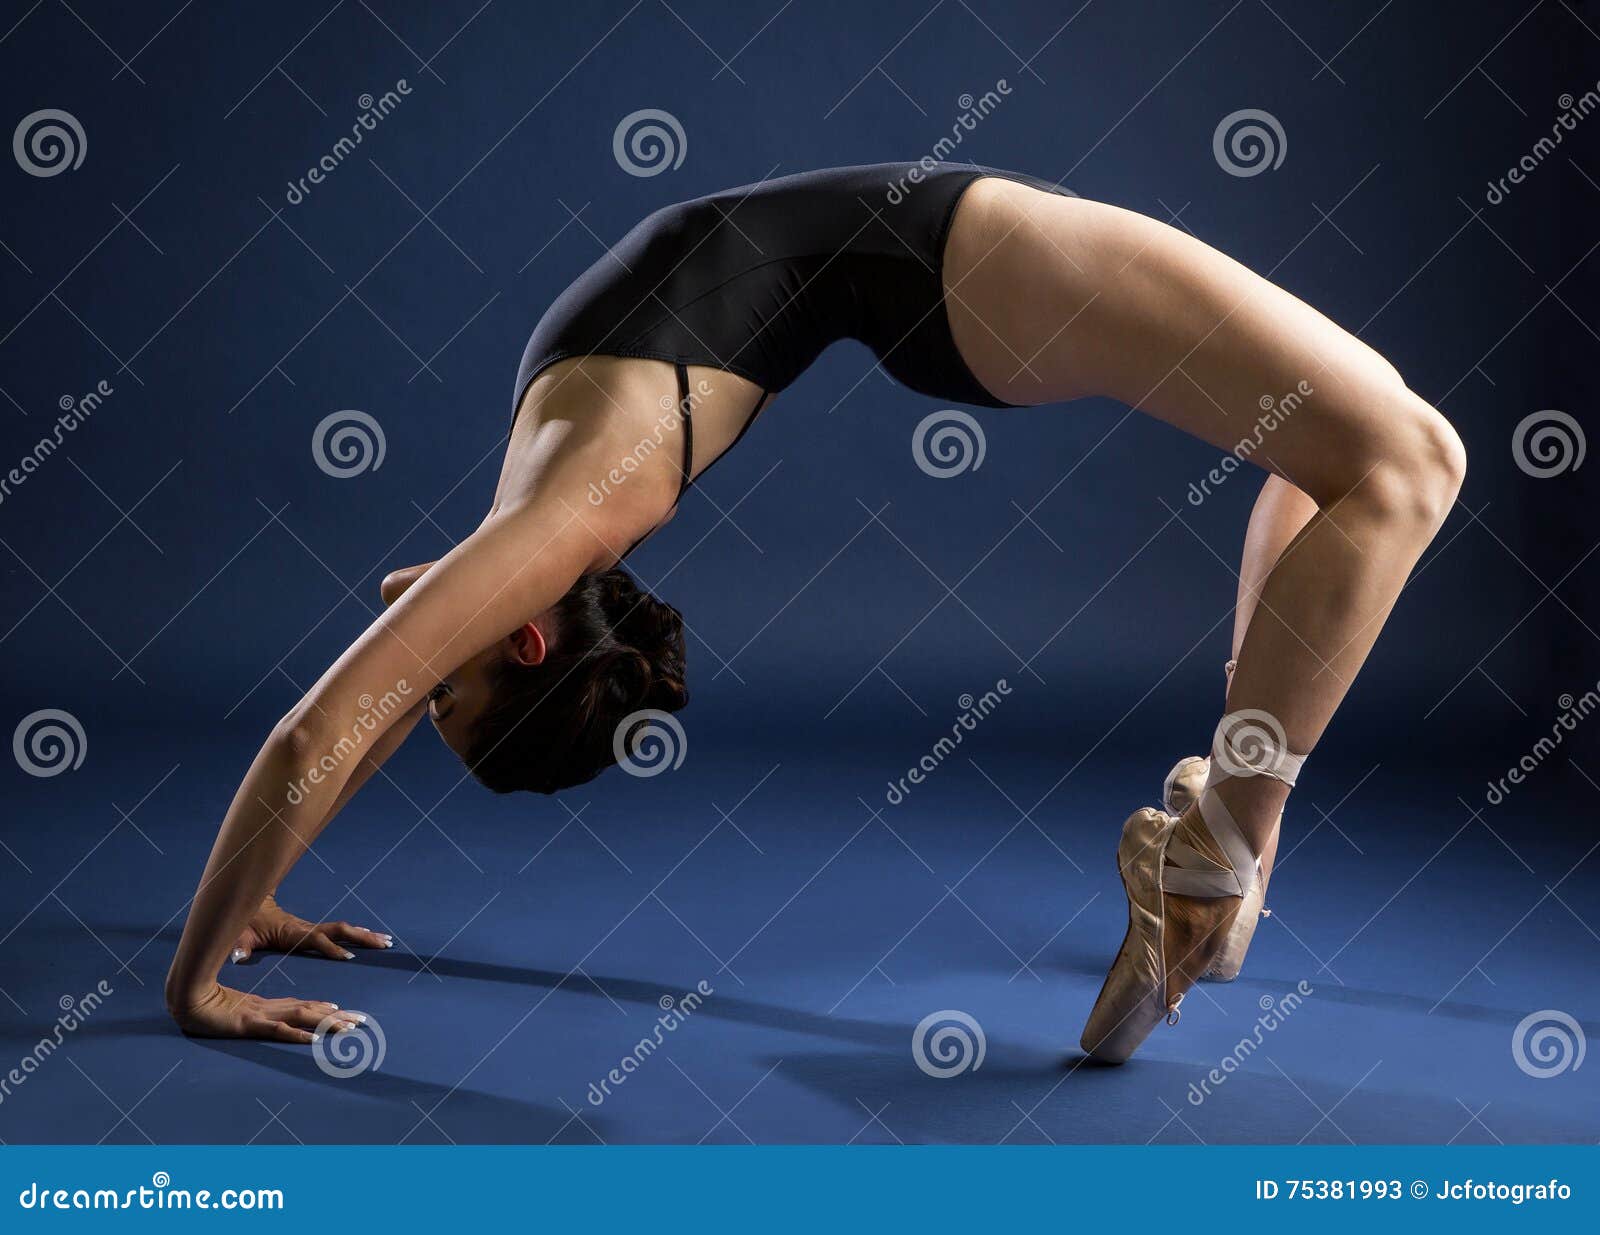 Ballet dancer and Gymnast stock image. Image of motion - 75381993